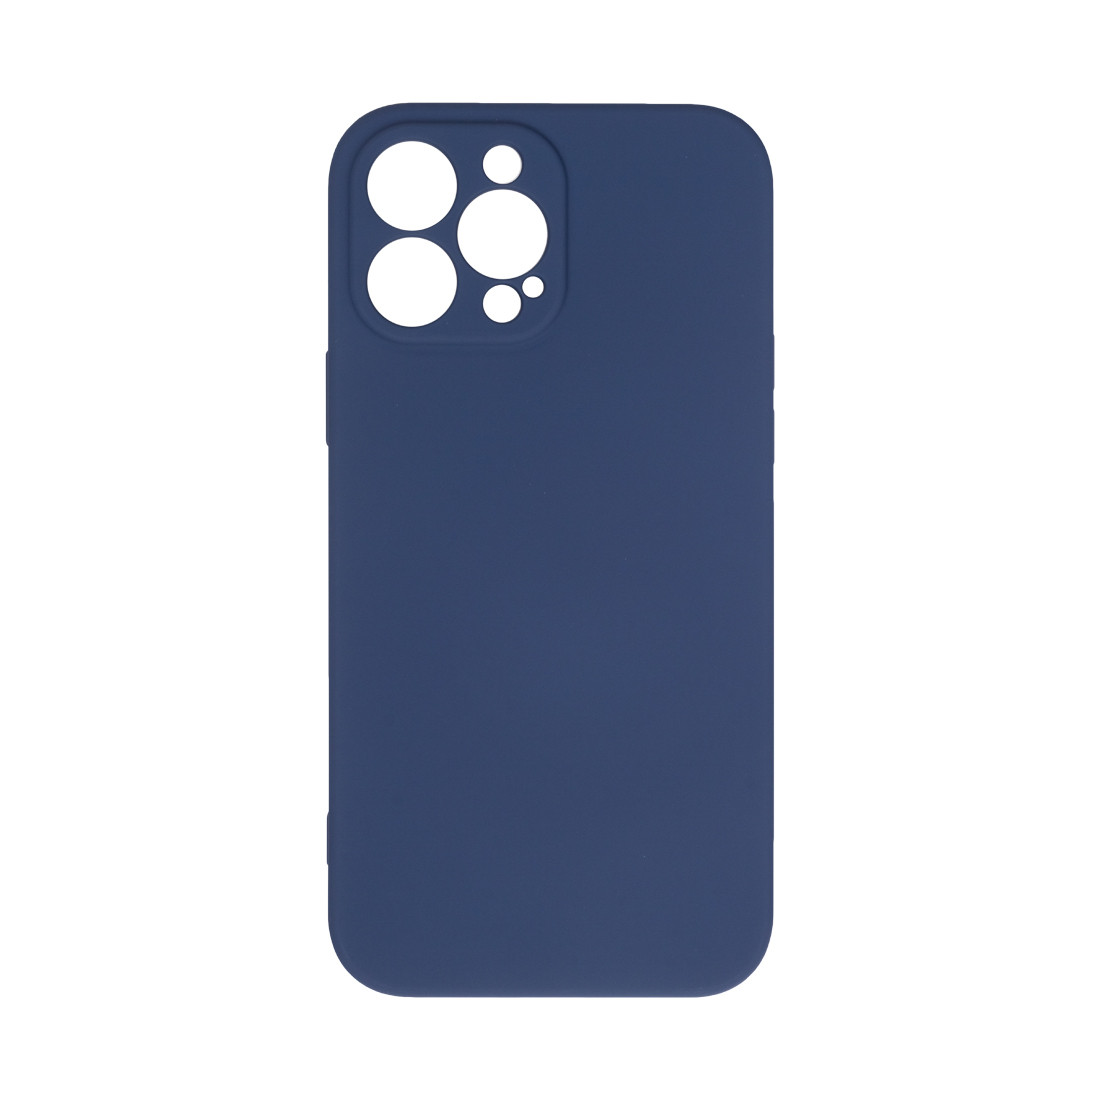 Чехол для телефона X-Game XG-HS84 для Iphone 13 Pro Max Силиконовый Тёмно-синий, фото 1